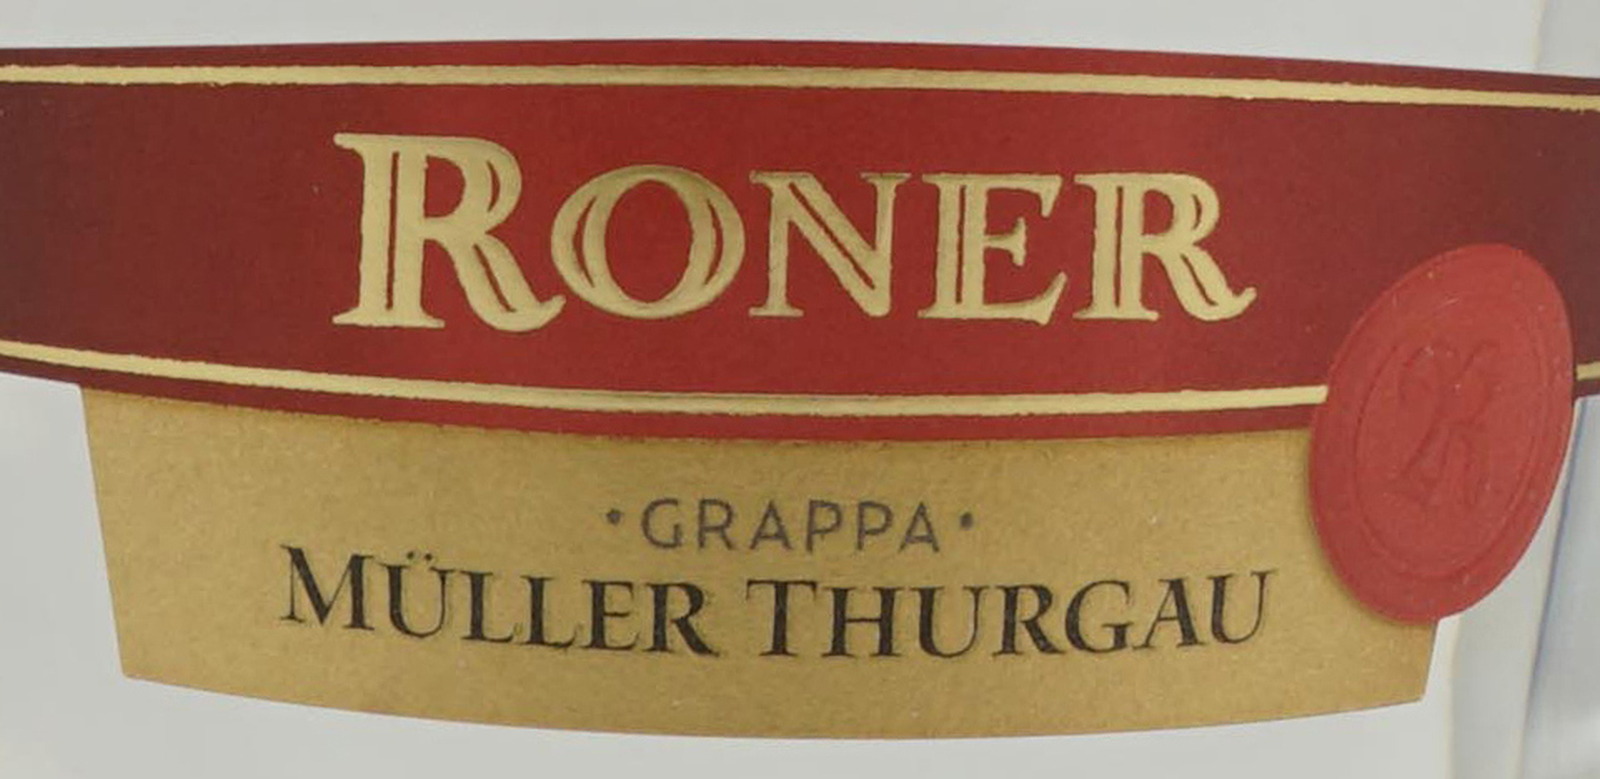 0,7 Grappa Liter Thurgau % Müller 40 Roner